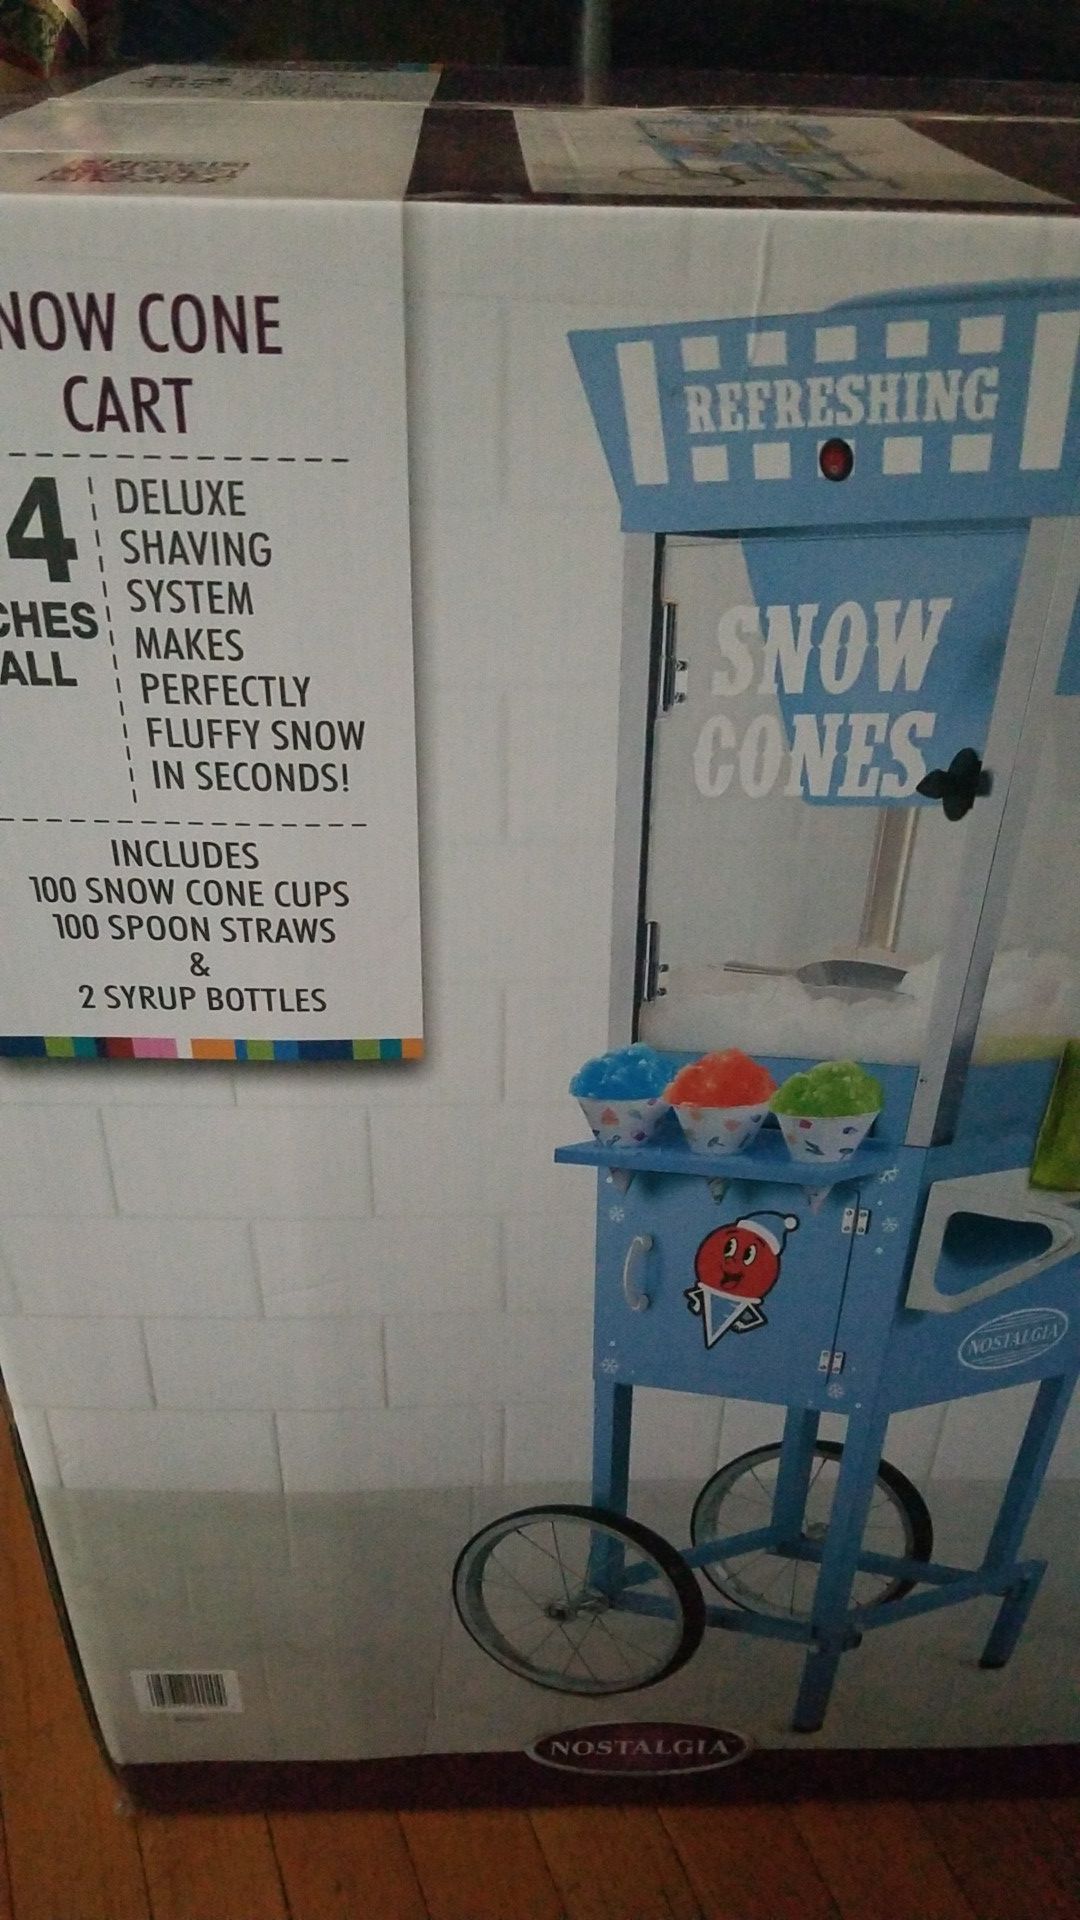 Snow cone cart